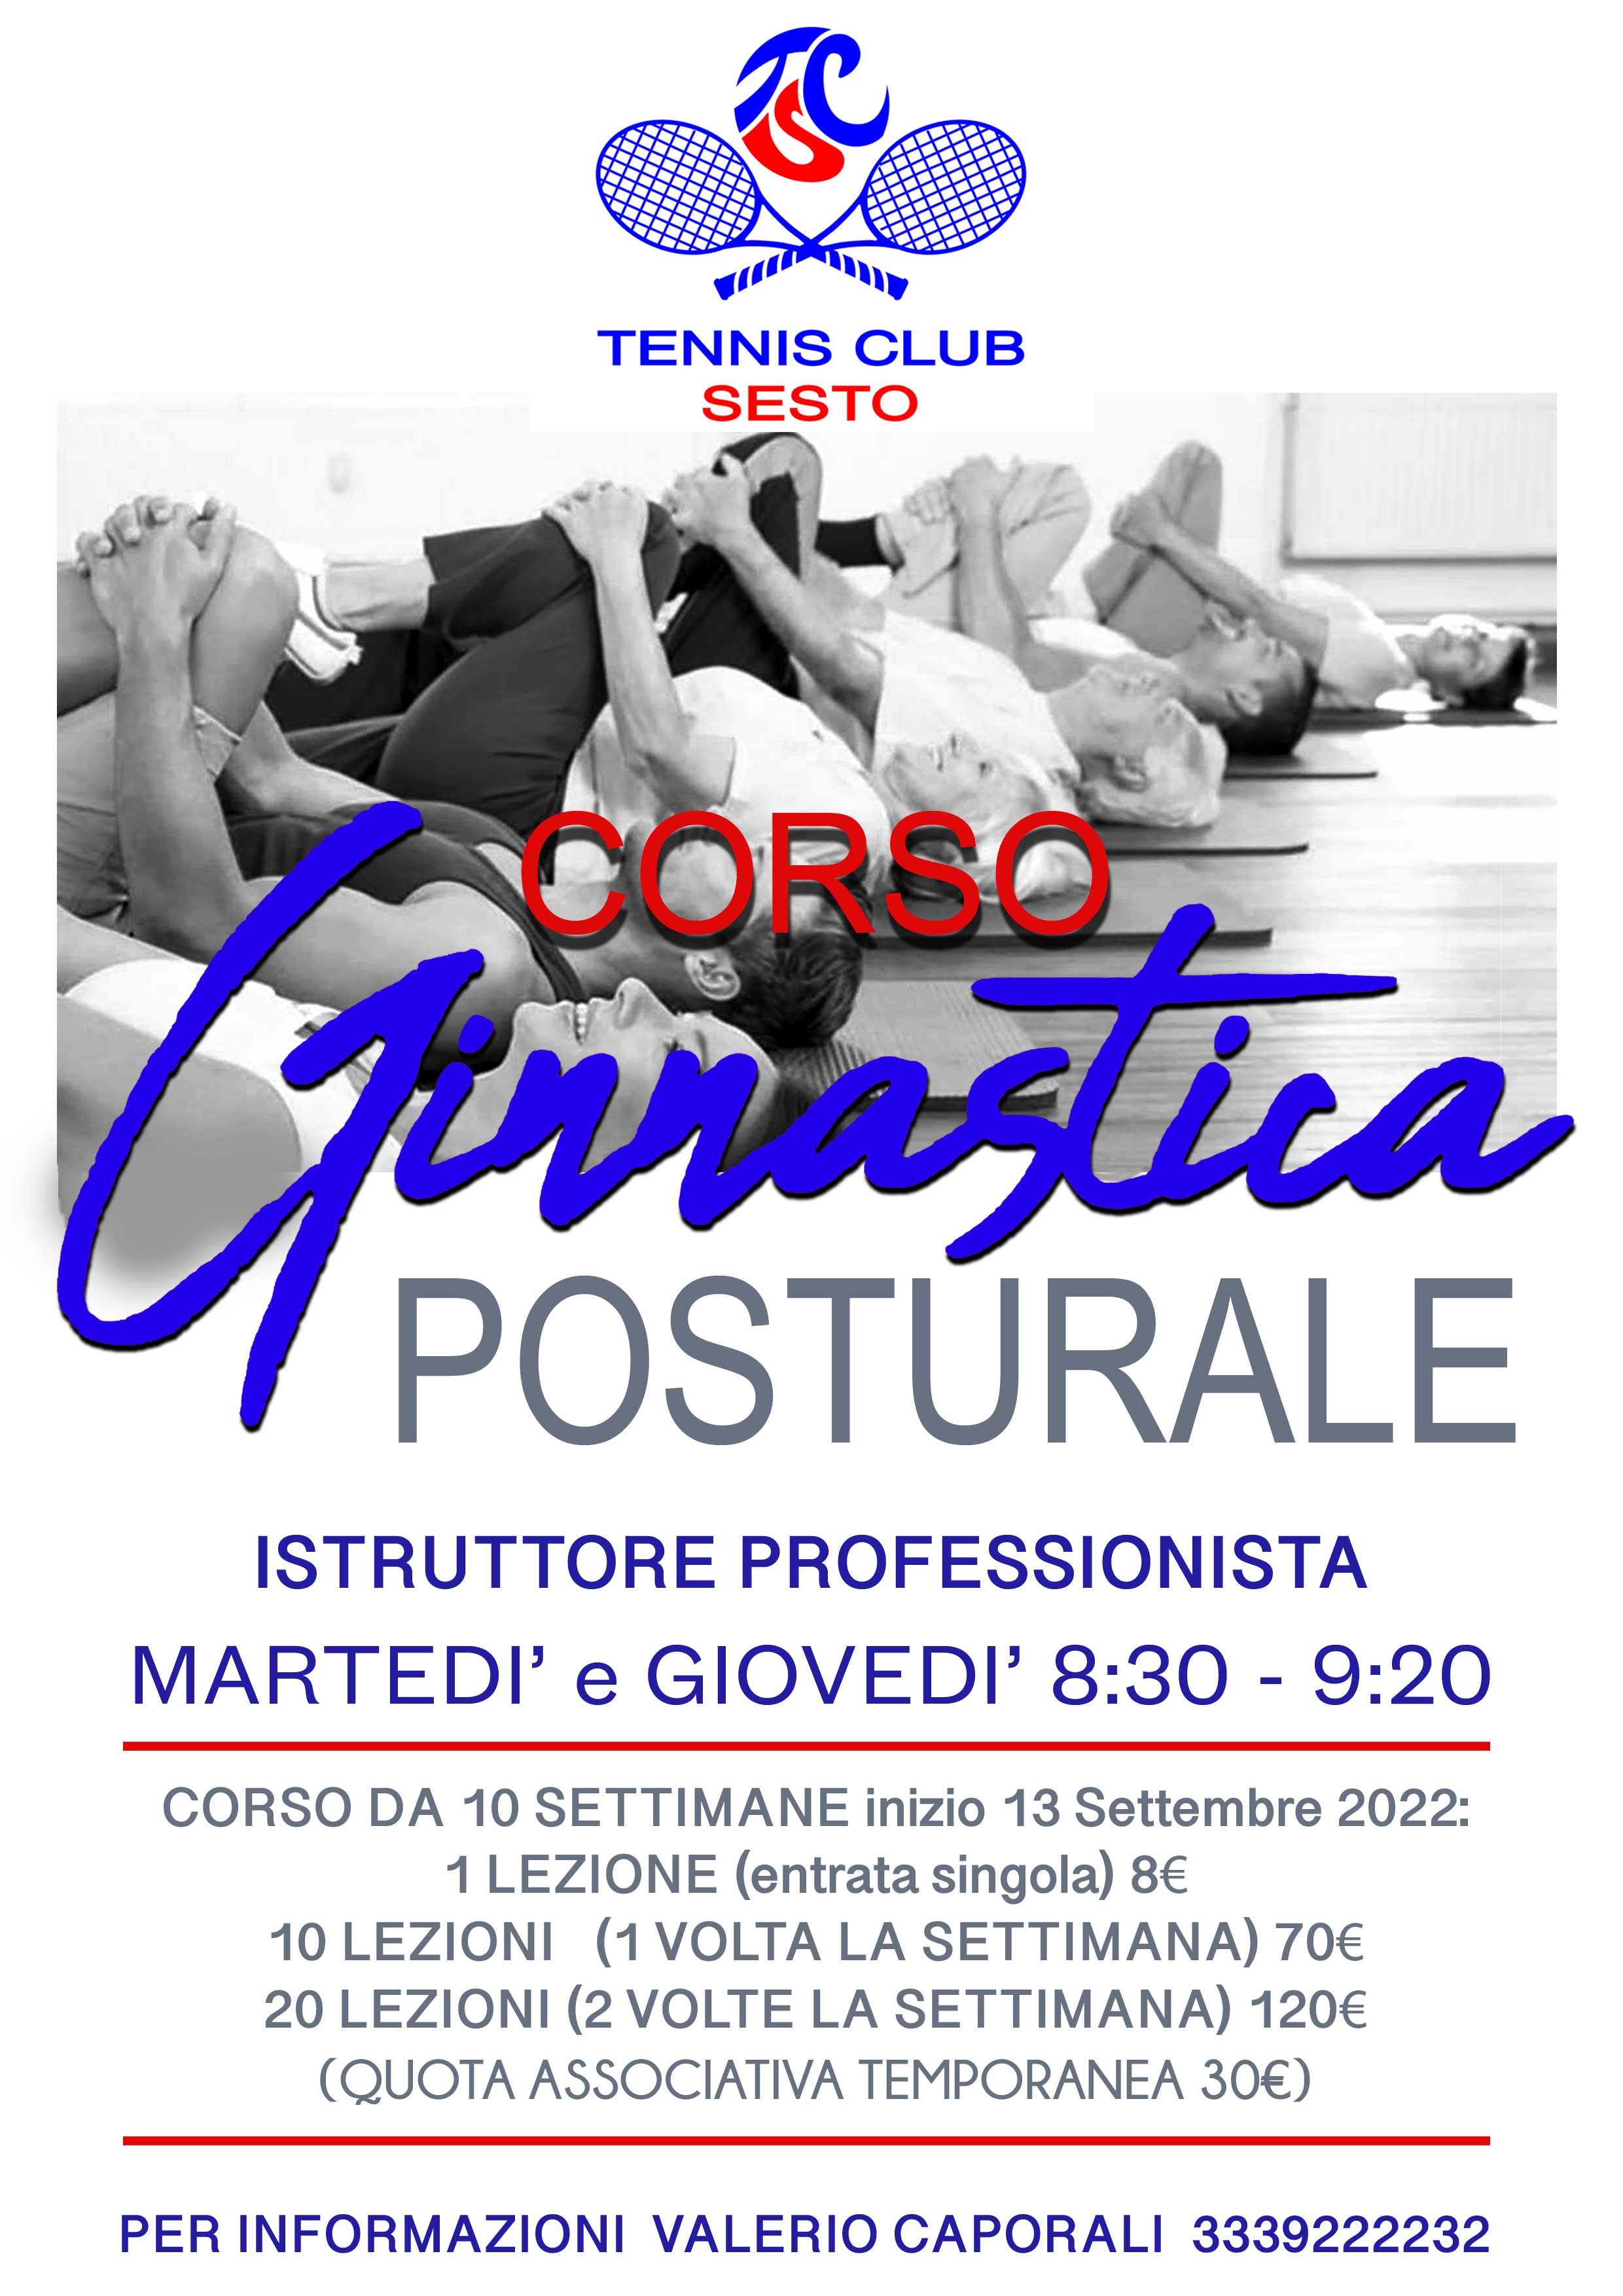 Corso-Ginnastica-Posturale-2022_2023jpg